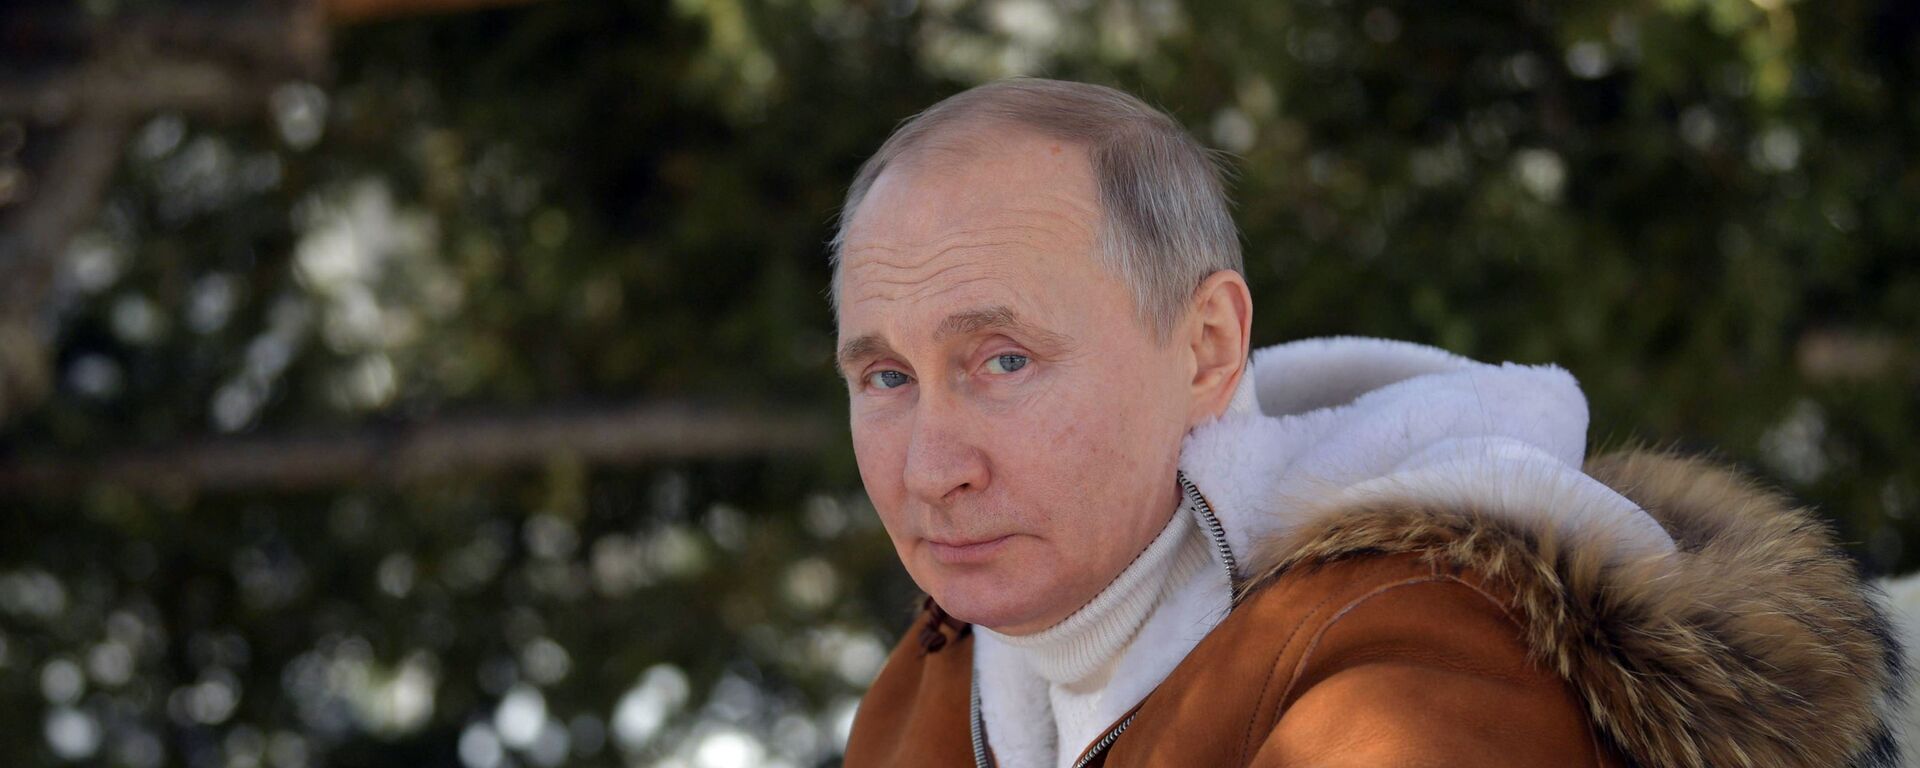 Президент РФ Владимир Путин во время прогулки в тайге - Sputnik Тоҷикистон, 1920, 14.04.2021